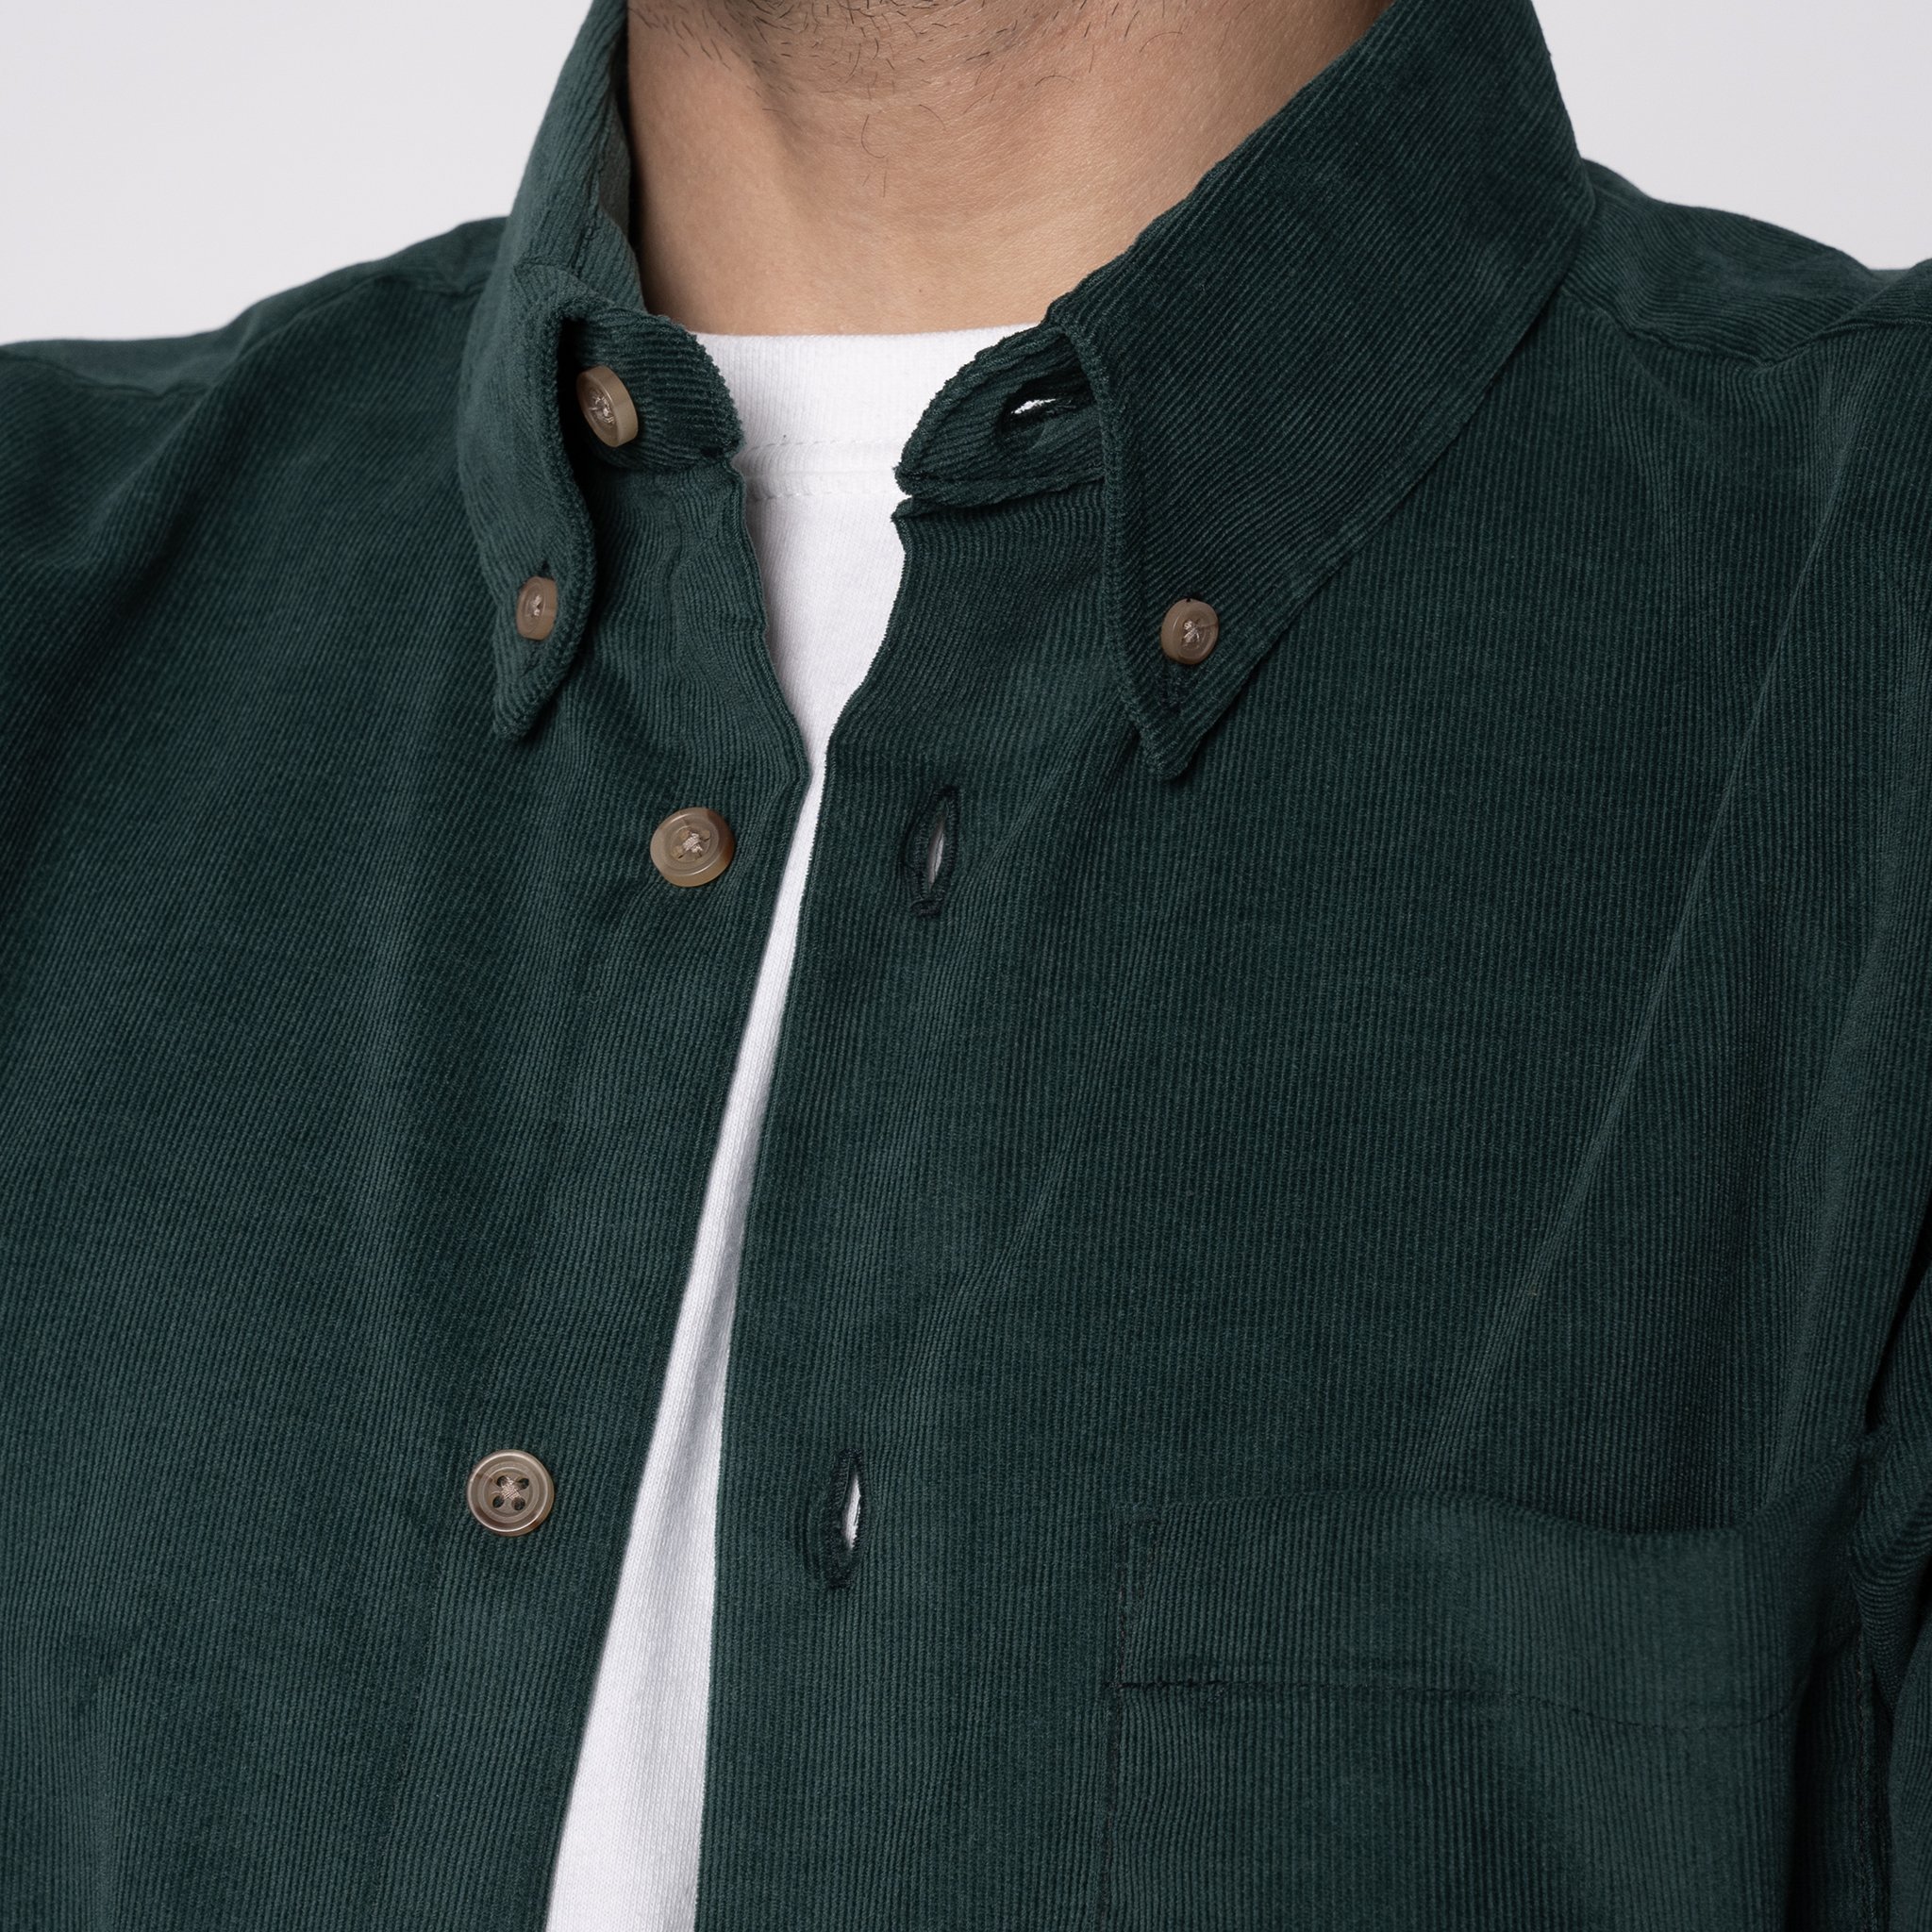  Easy Shirt - Cotton Dyed Corduroy - Green 